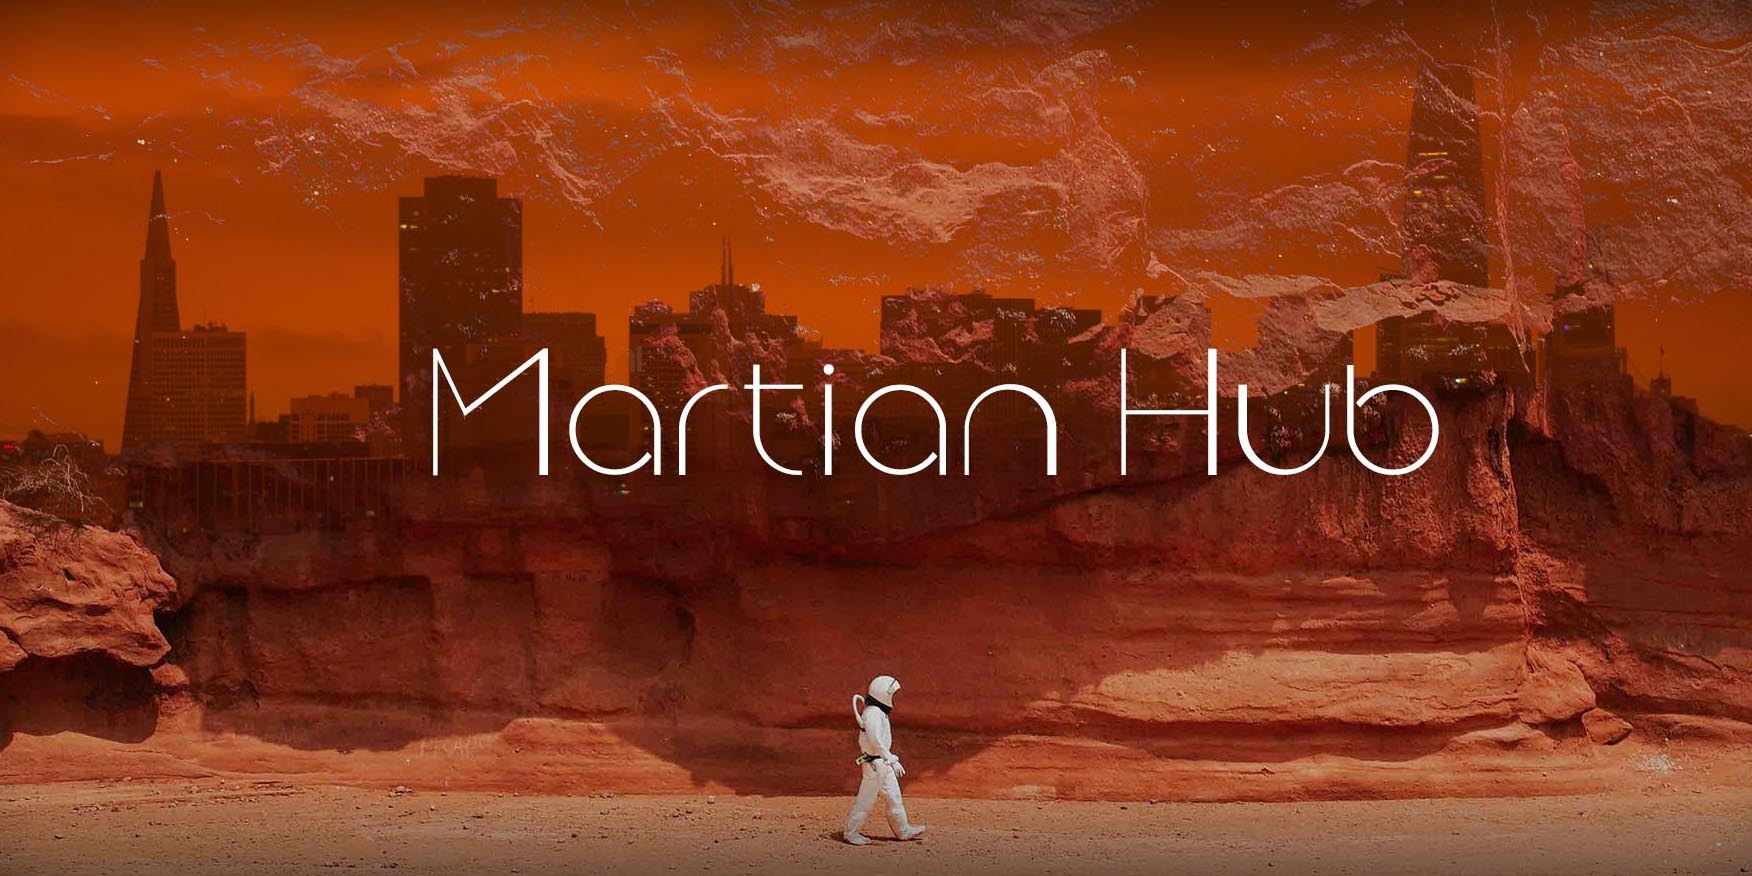 Designers conceptualize modular housing colony to inhabit planet Mars. 1